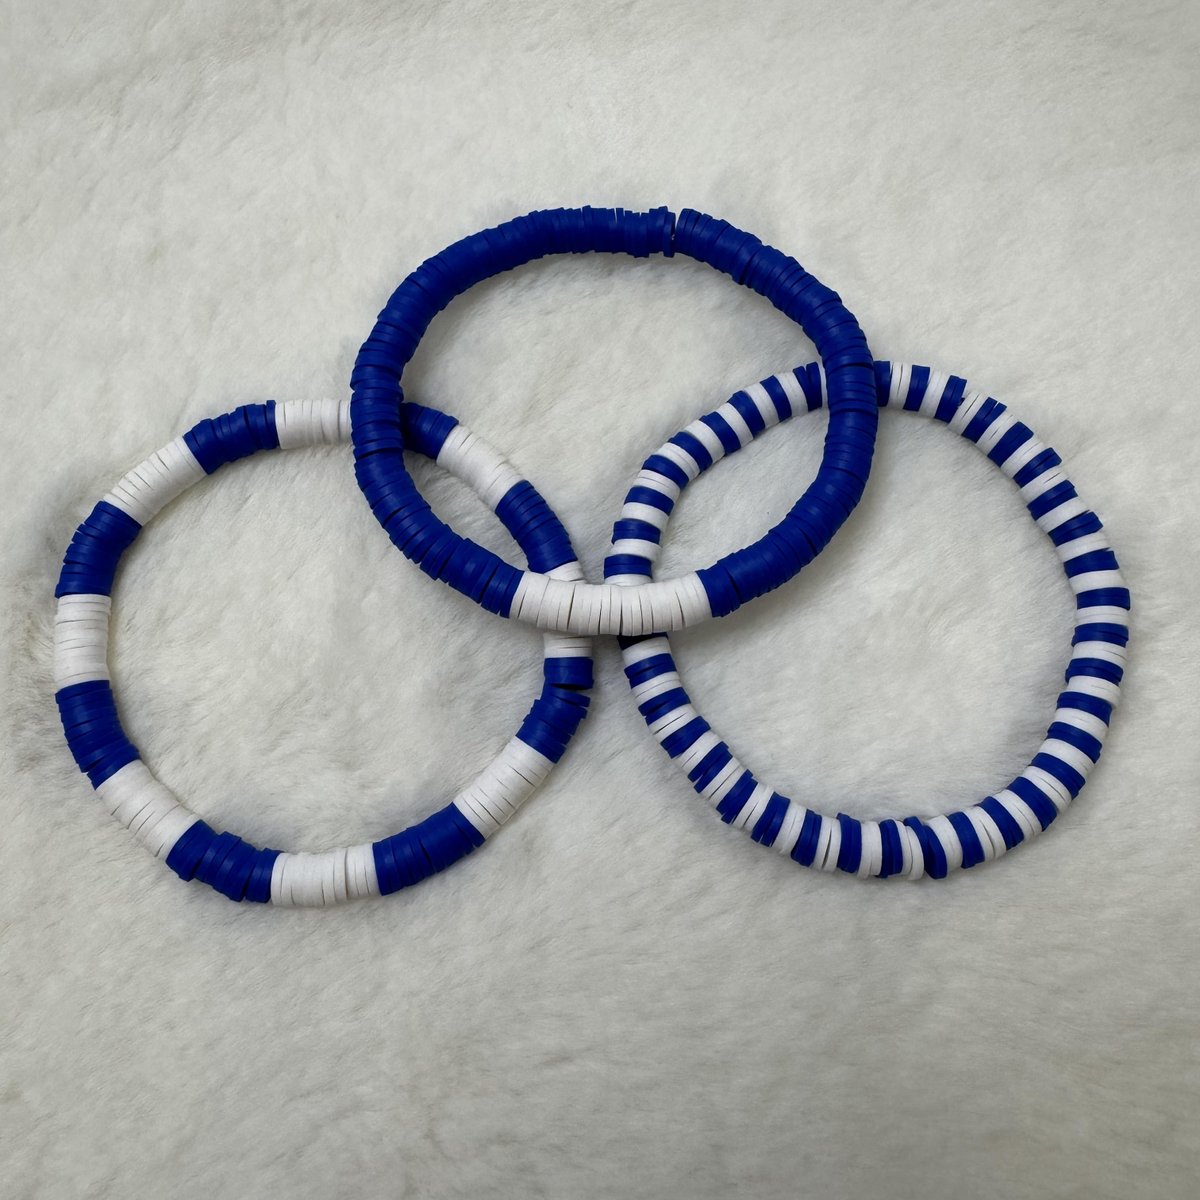 Navy Blue and White Heishi Clay Bead Bracelet Trio

aldesignsbyashley.etsy.com

#etsyshop #etsyseller #etsyhandmade #etsy #handmade #handmadejewelry #handmadeearrings #earrings #handmadeearringsforsale #earringstyle #etsygifts #etsysellersofinstagram #jewelry #jewelrydesign